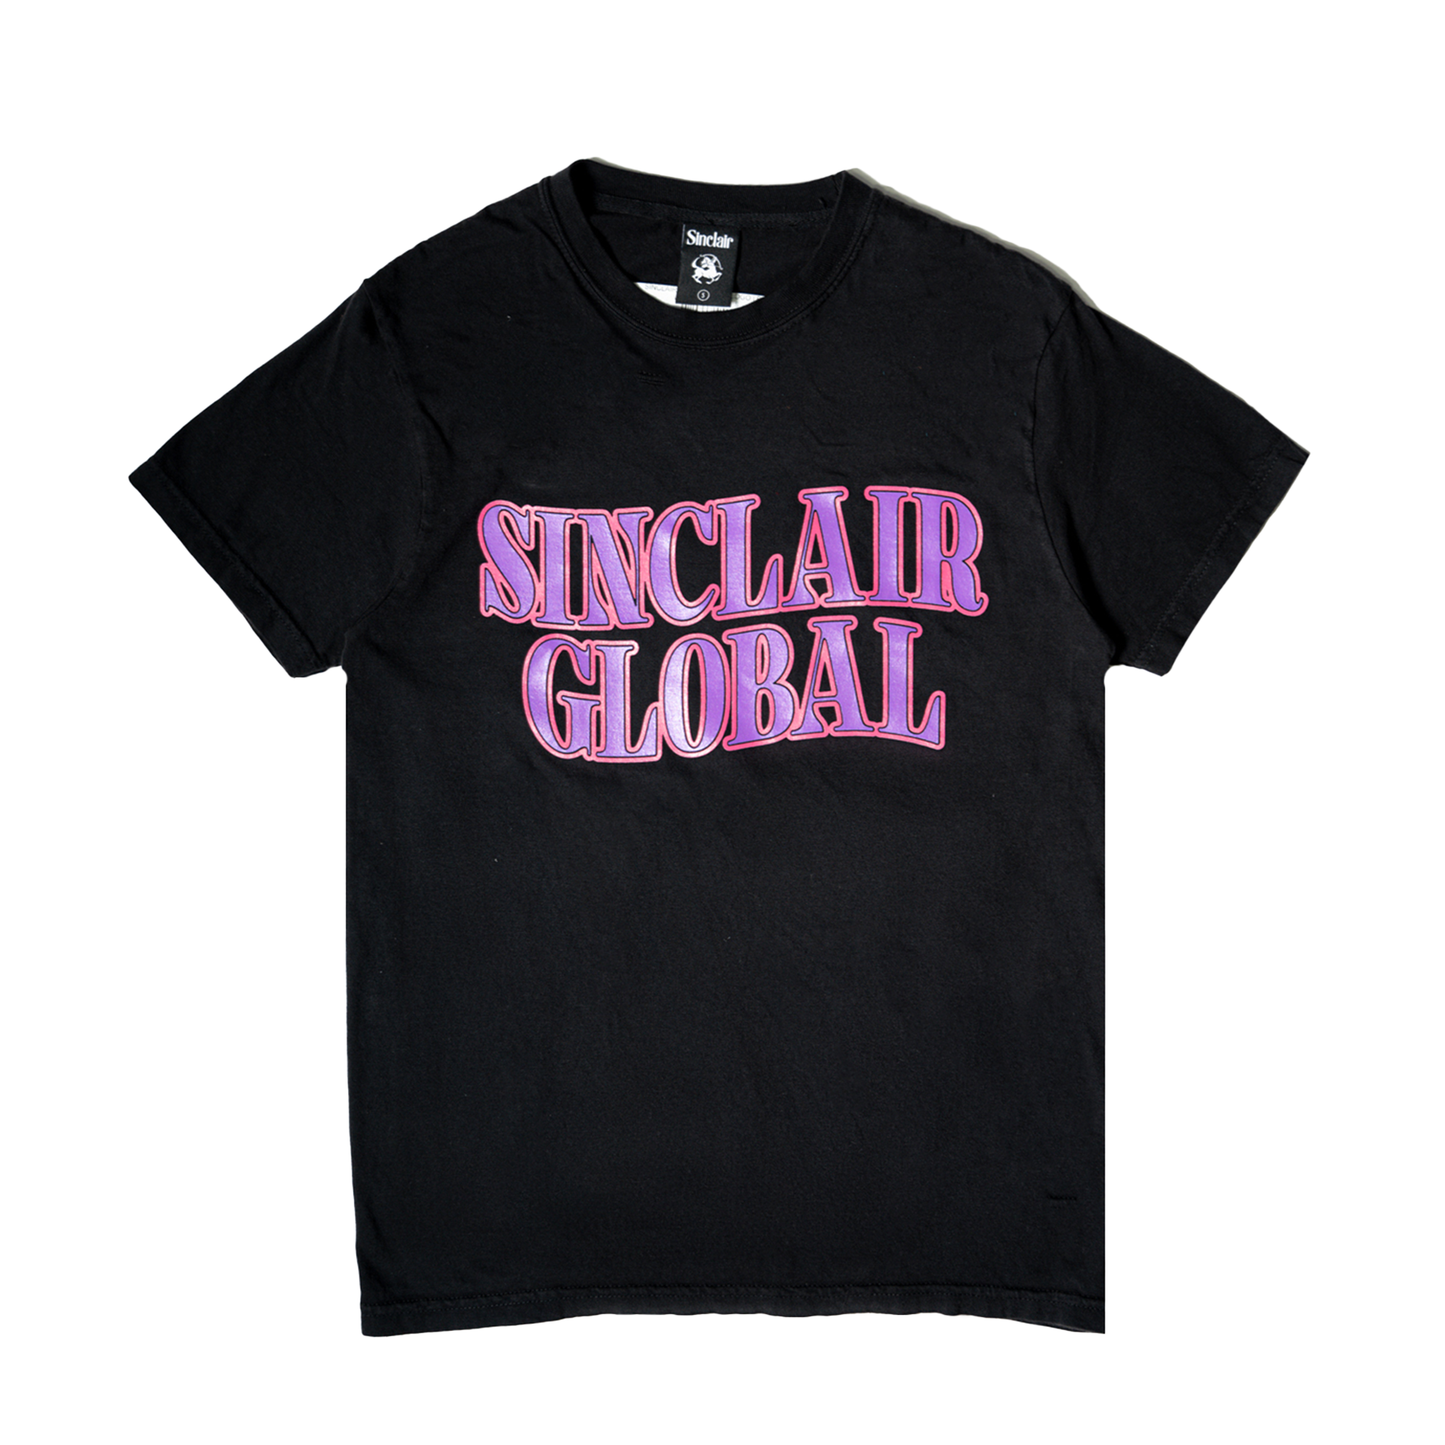 Sinclair Global "Wavy" Logo Tee - "Black"